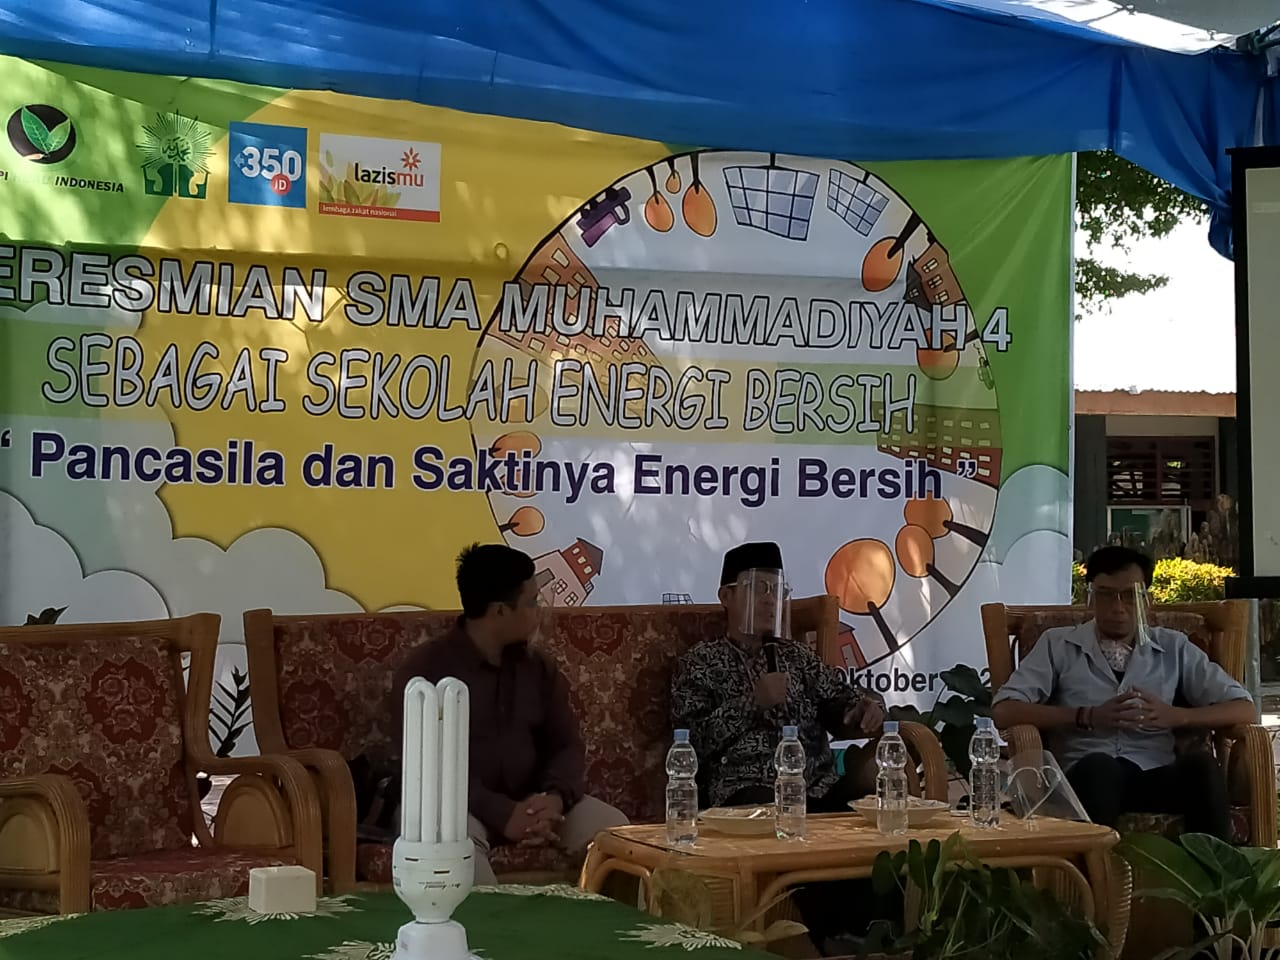 SMAM 4 Bengkulu Sekolah Energi Bersih